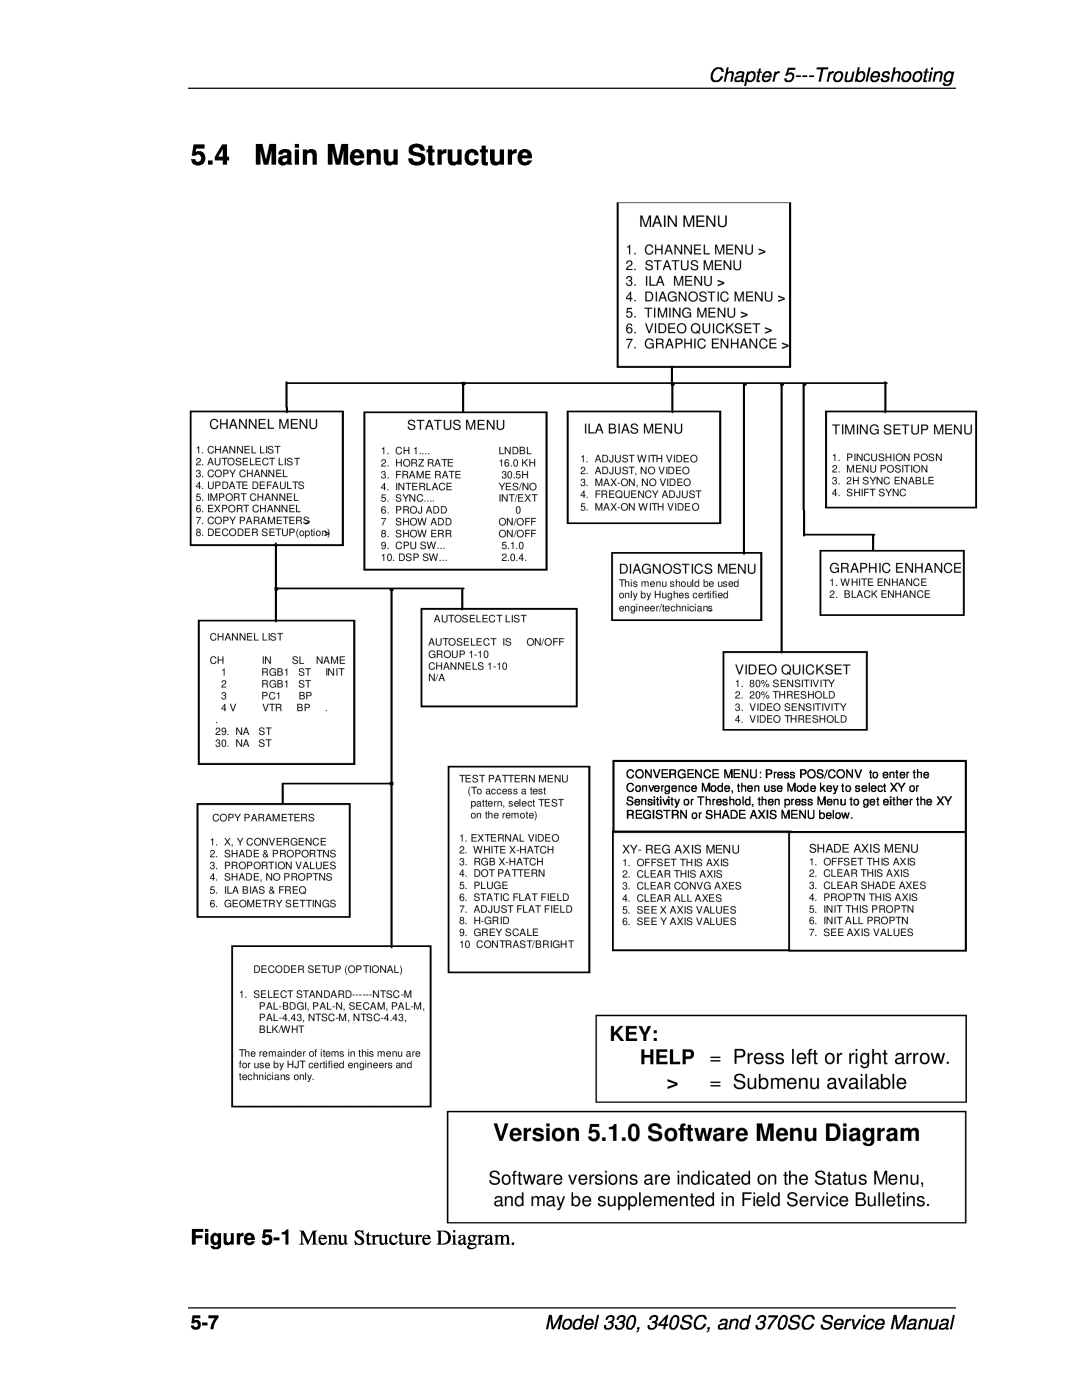 JVC 330, 370 SC, 340 SC service manual Main Menu Structure, Version 5.1.0 Software Menu Diagram, Troubleshooting 